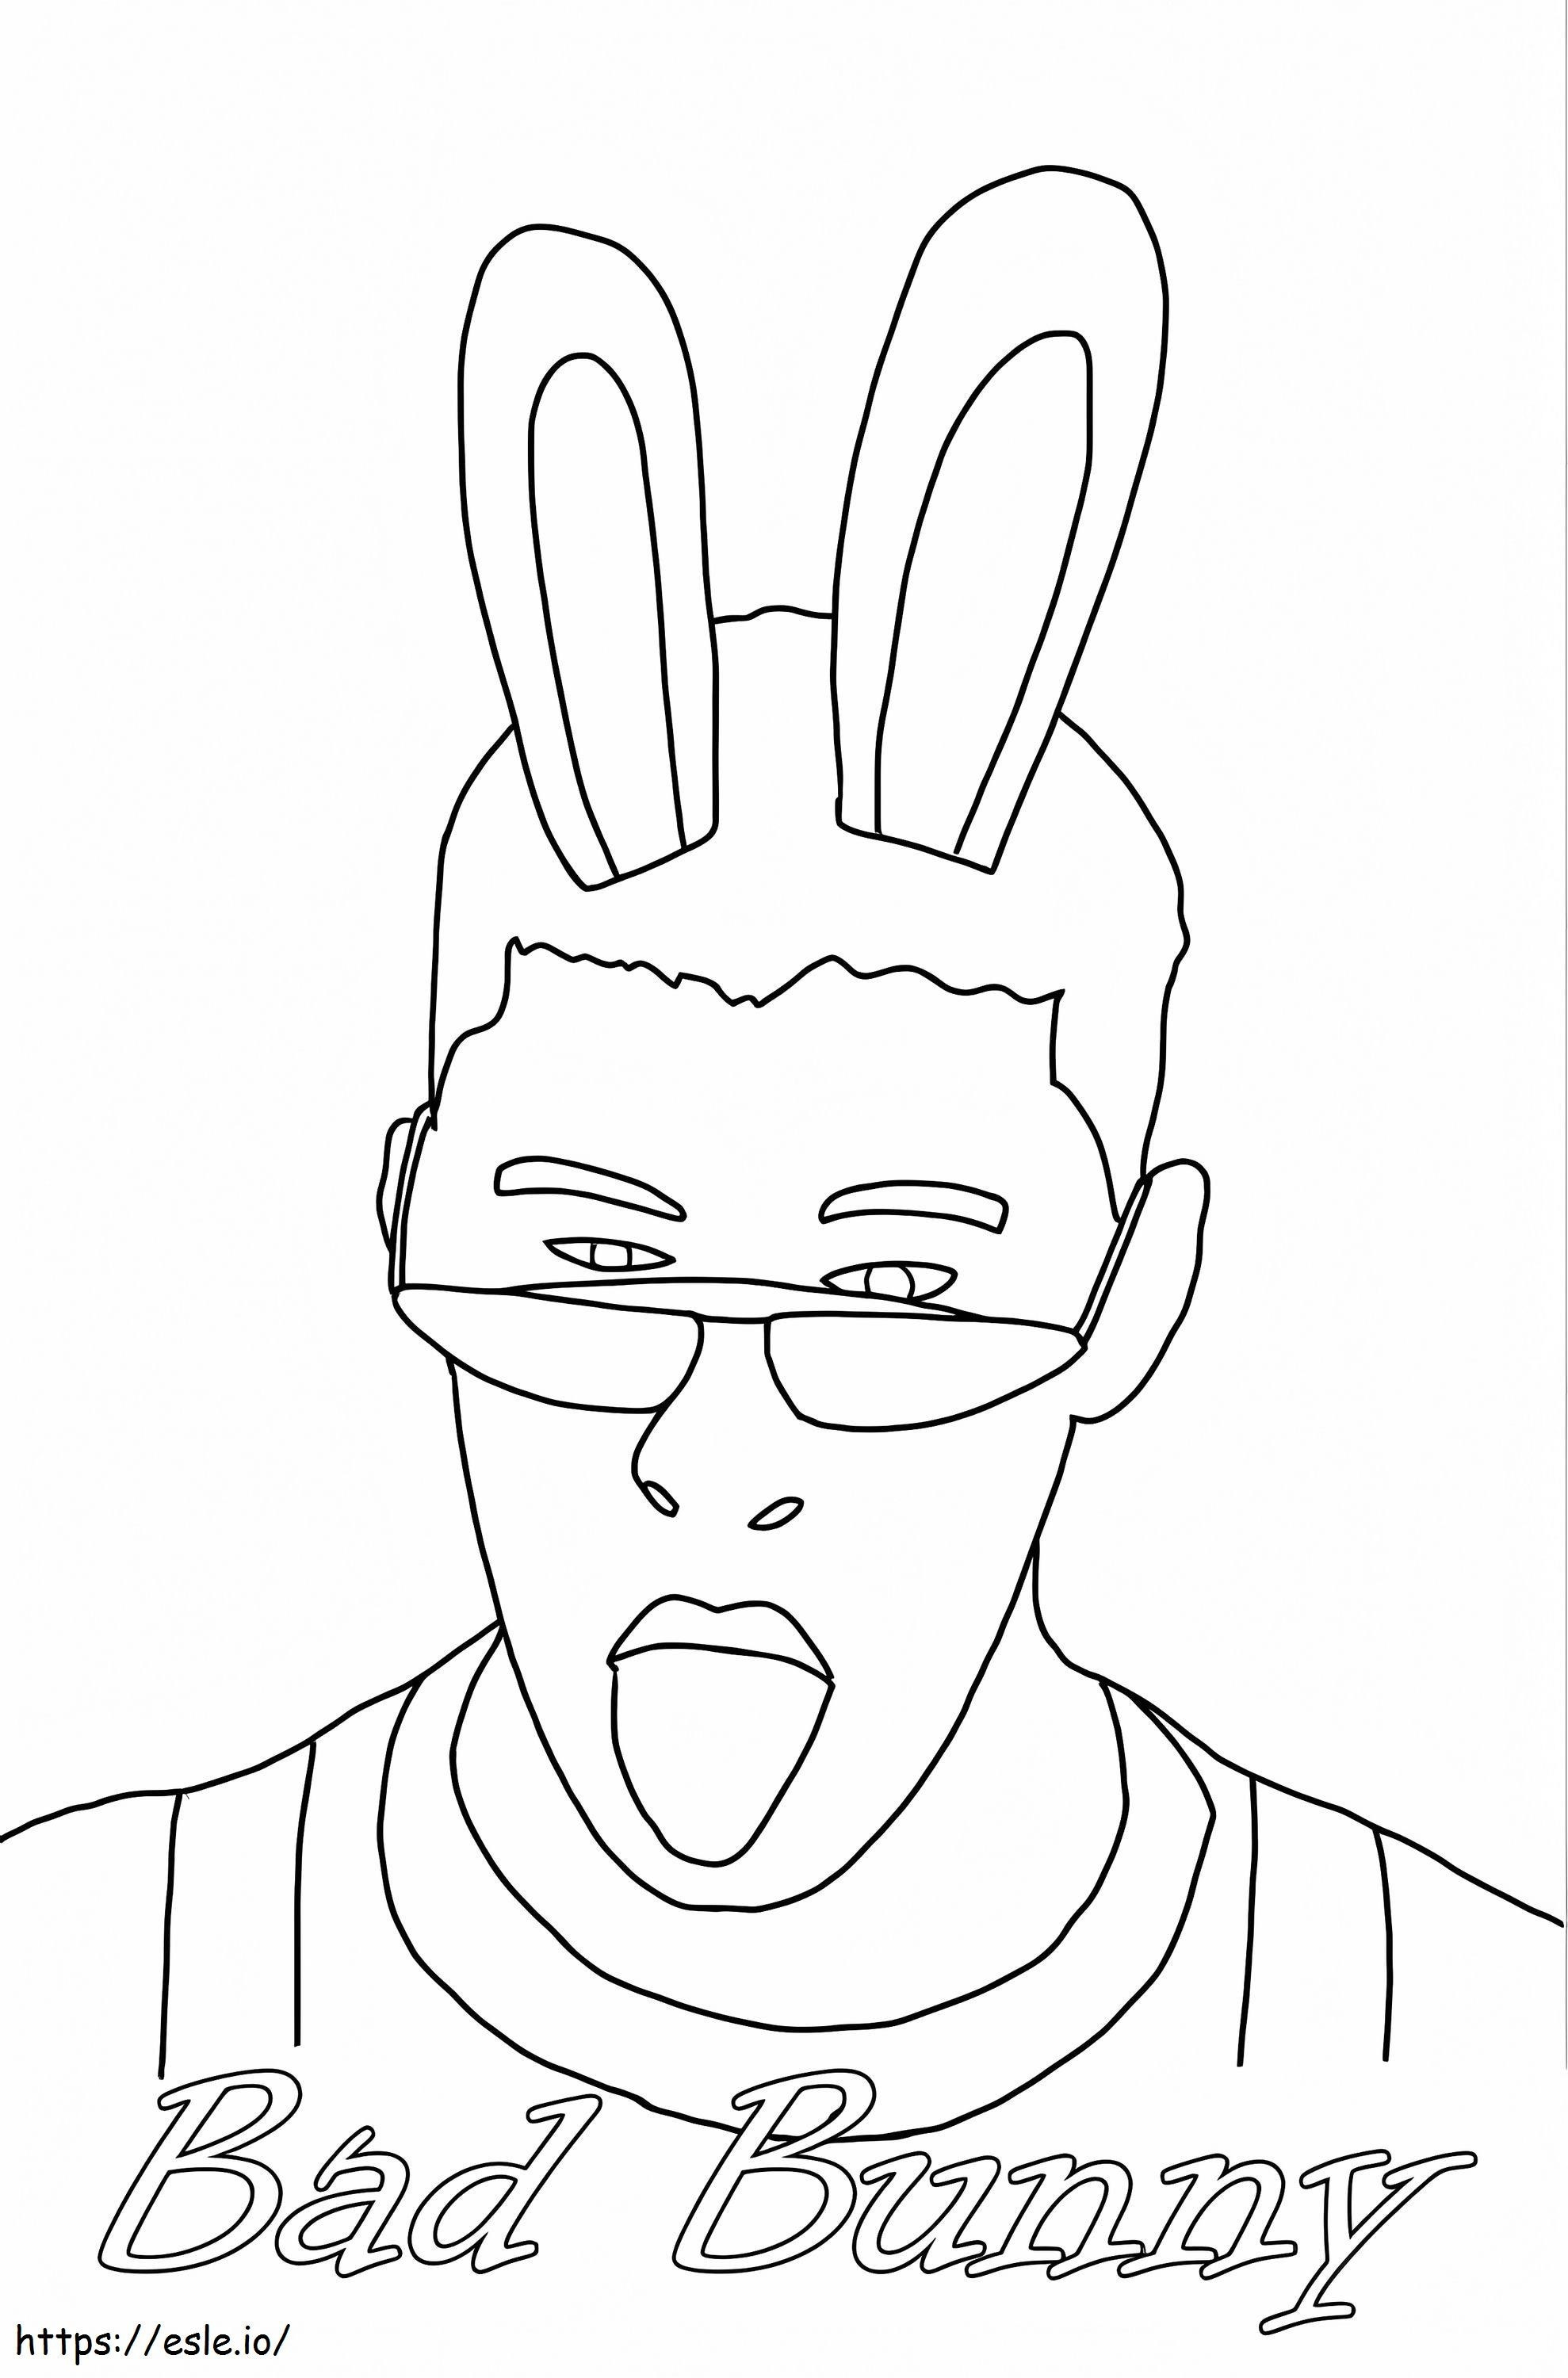 Bad Bunny 1 coloring page